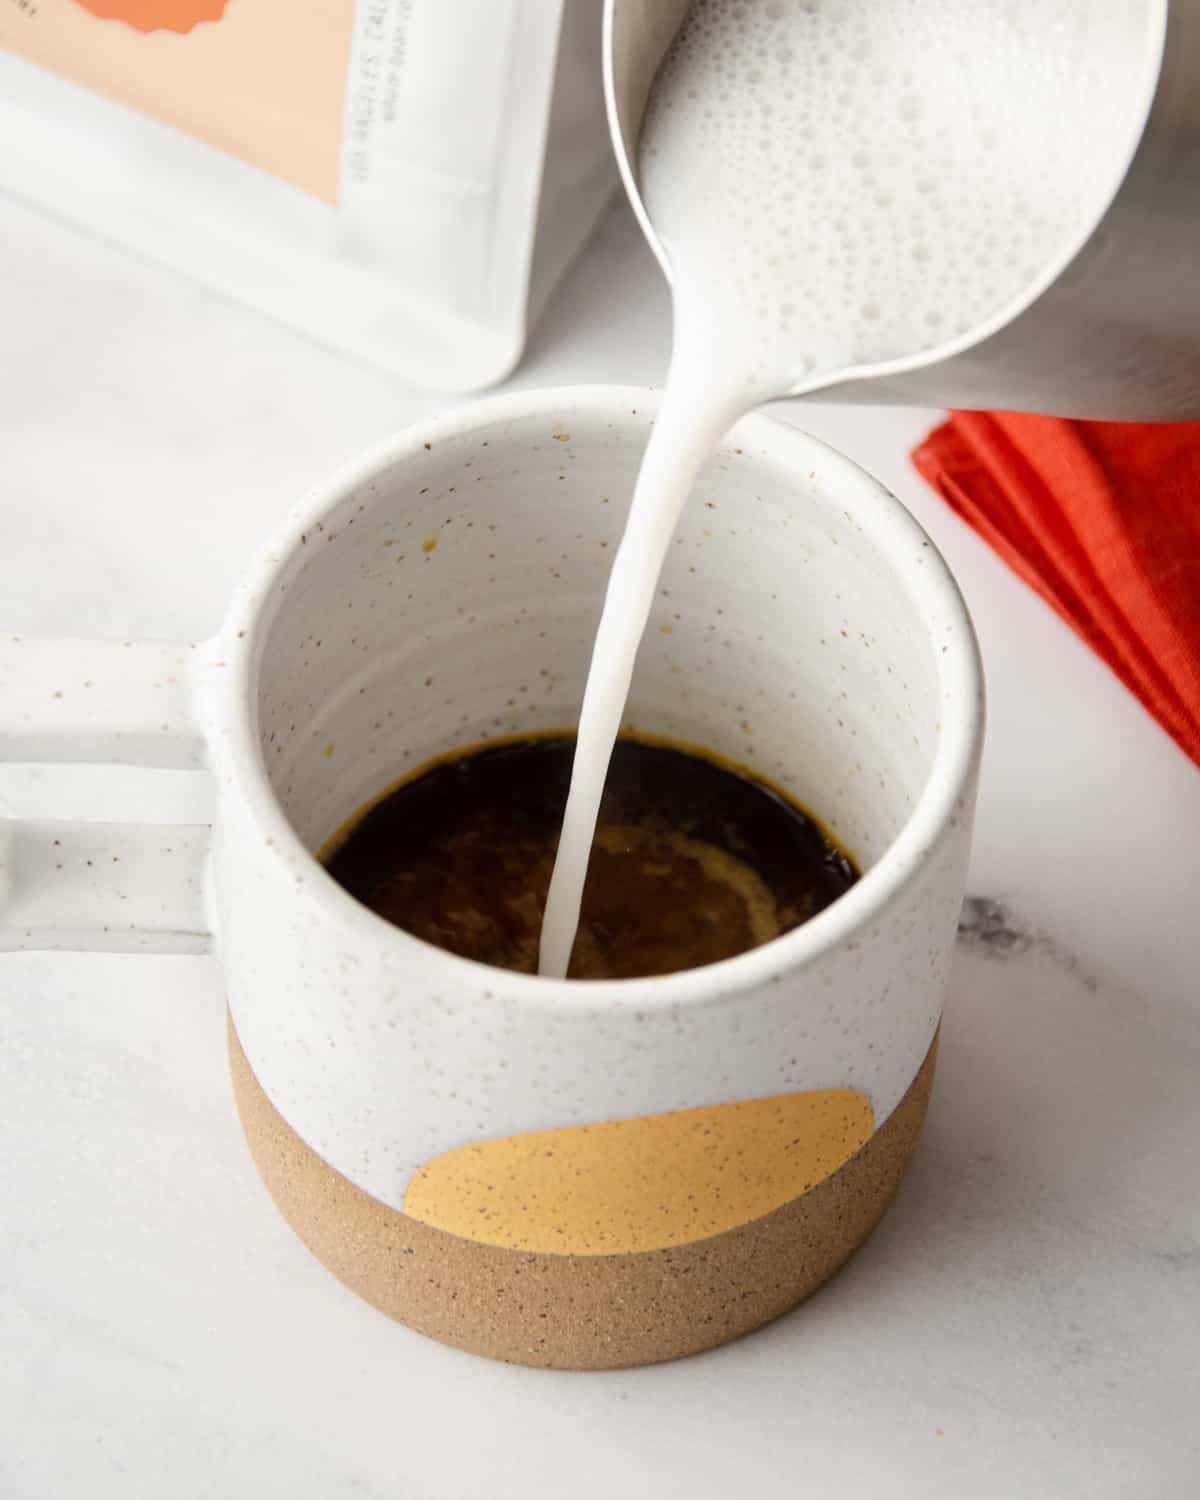 Pouring scalded milk into a shot of espresso.